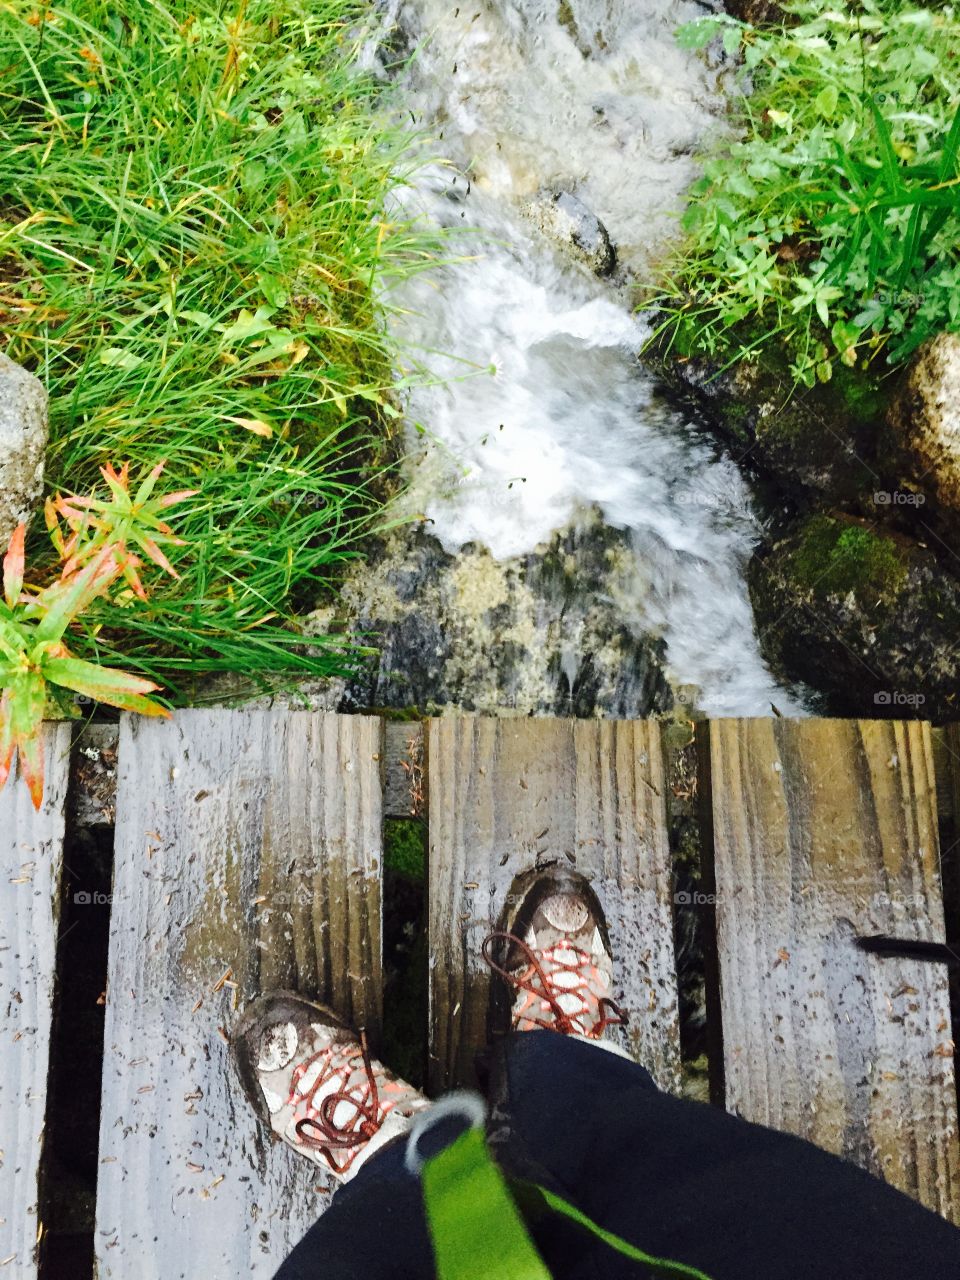 Ran into this cool bridge in my hike 🍃🌱🌼